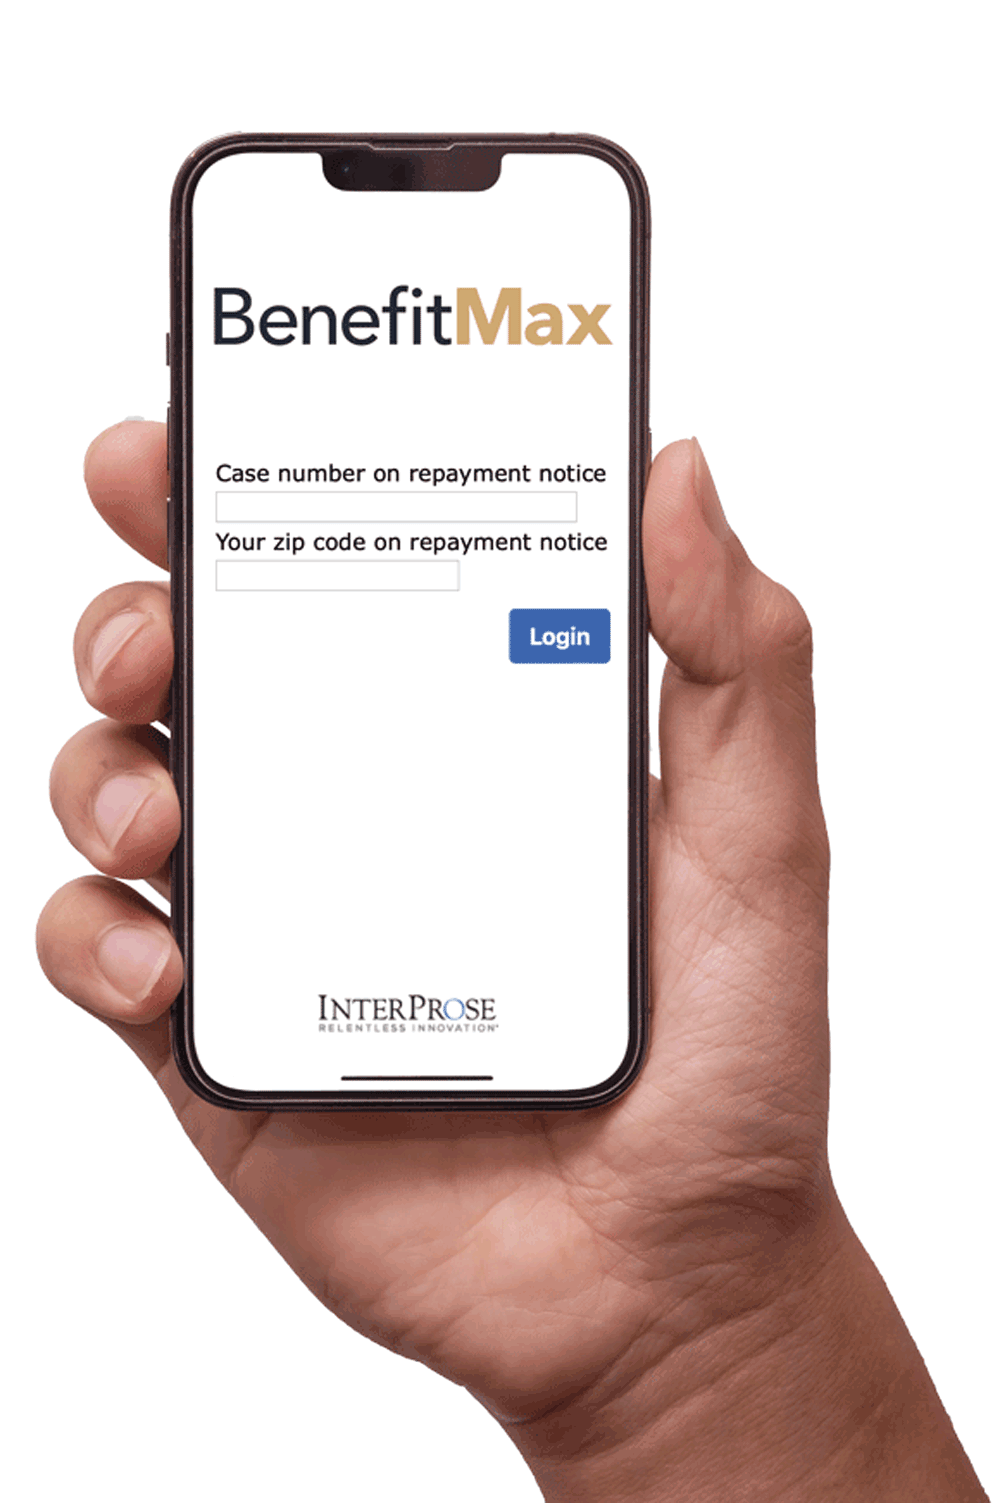 Benefit Max repayment portal mobile view